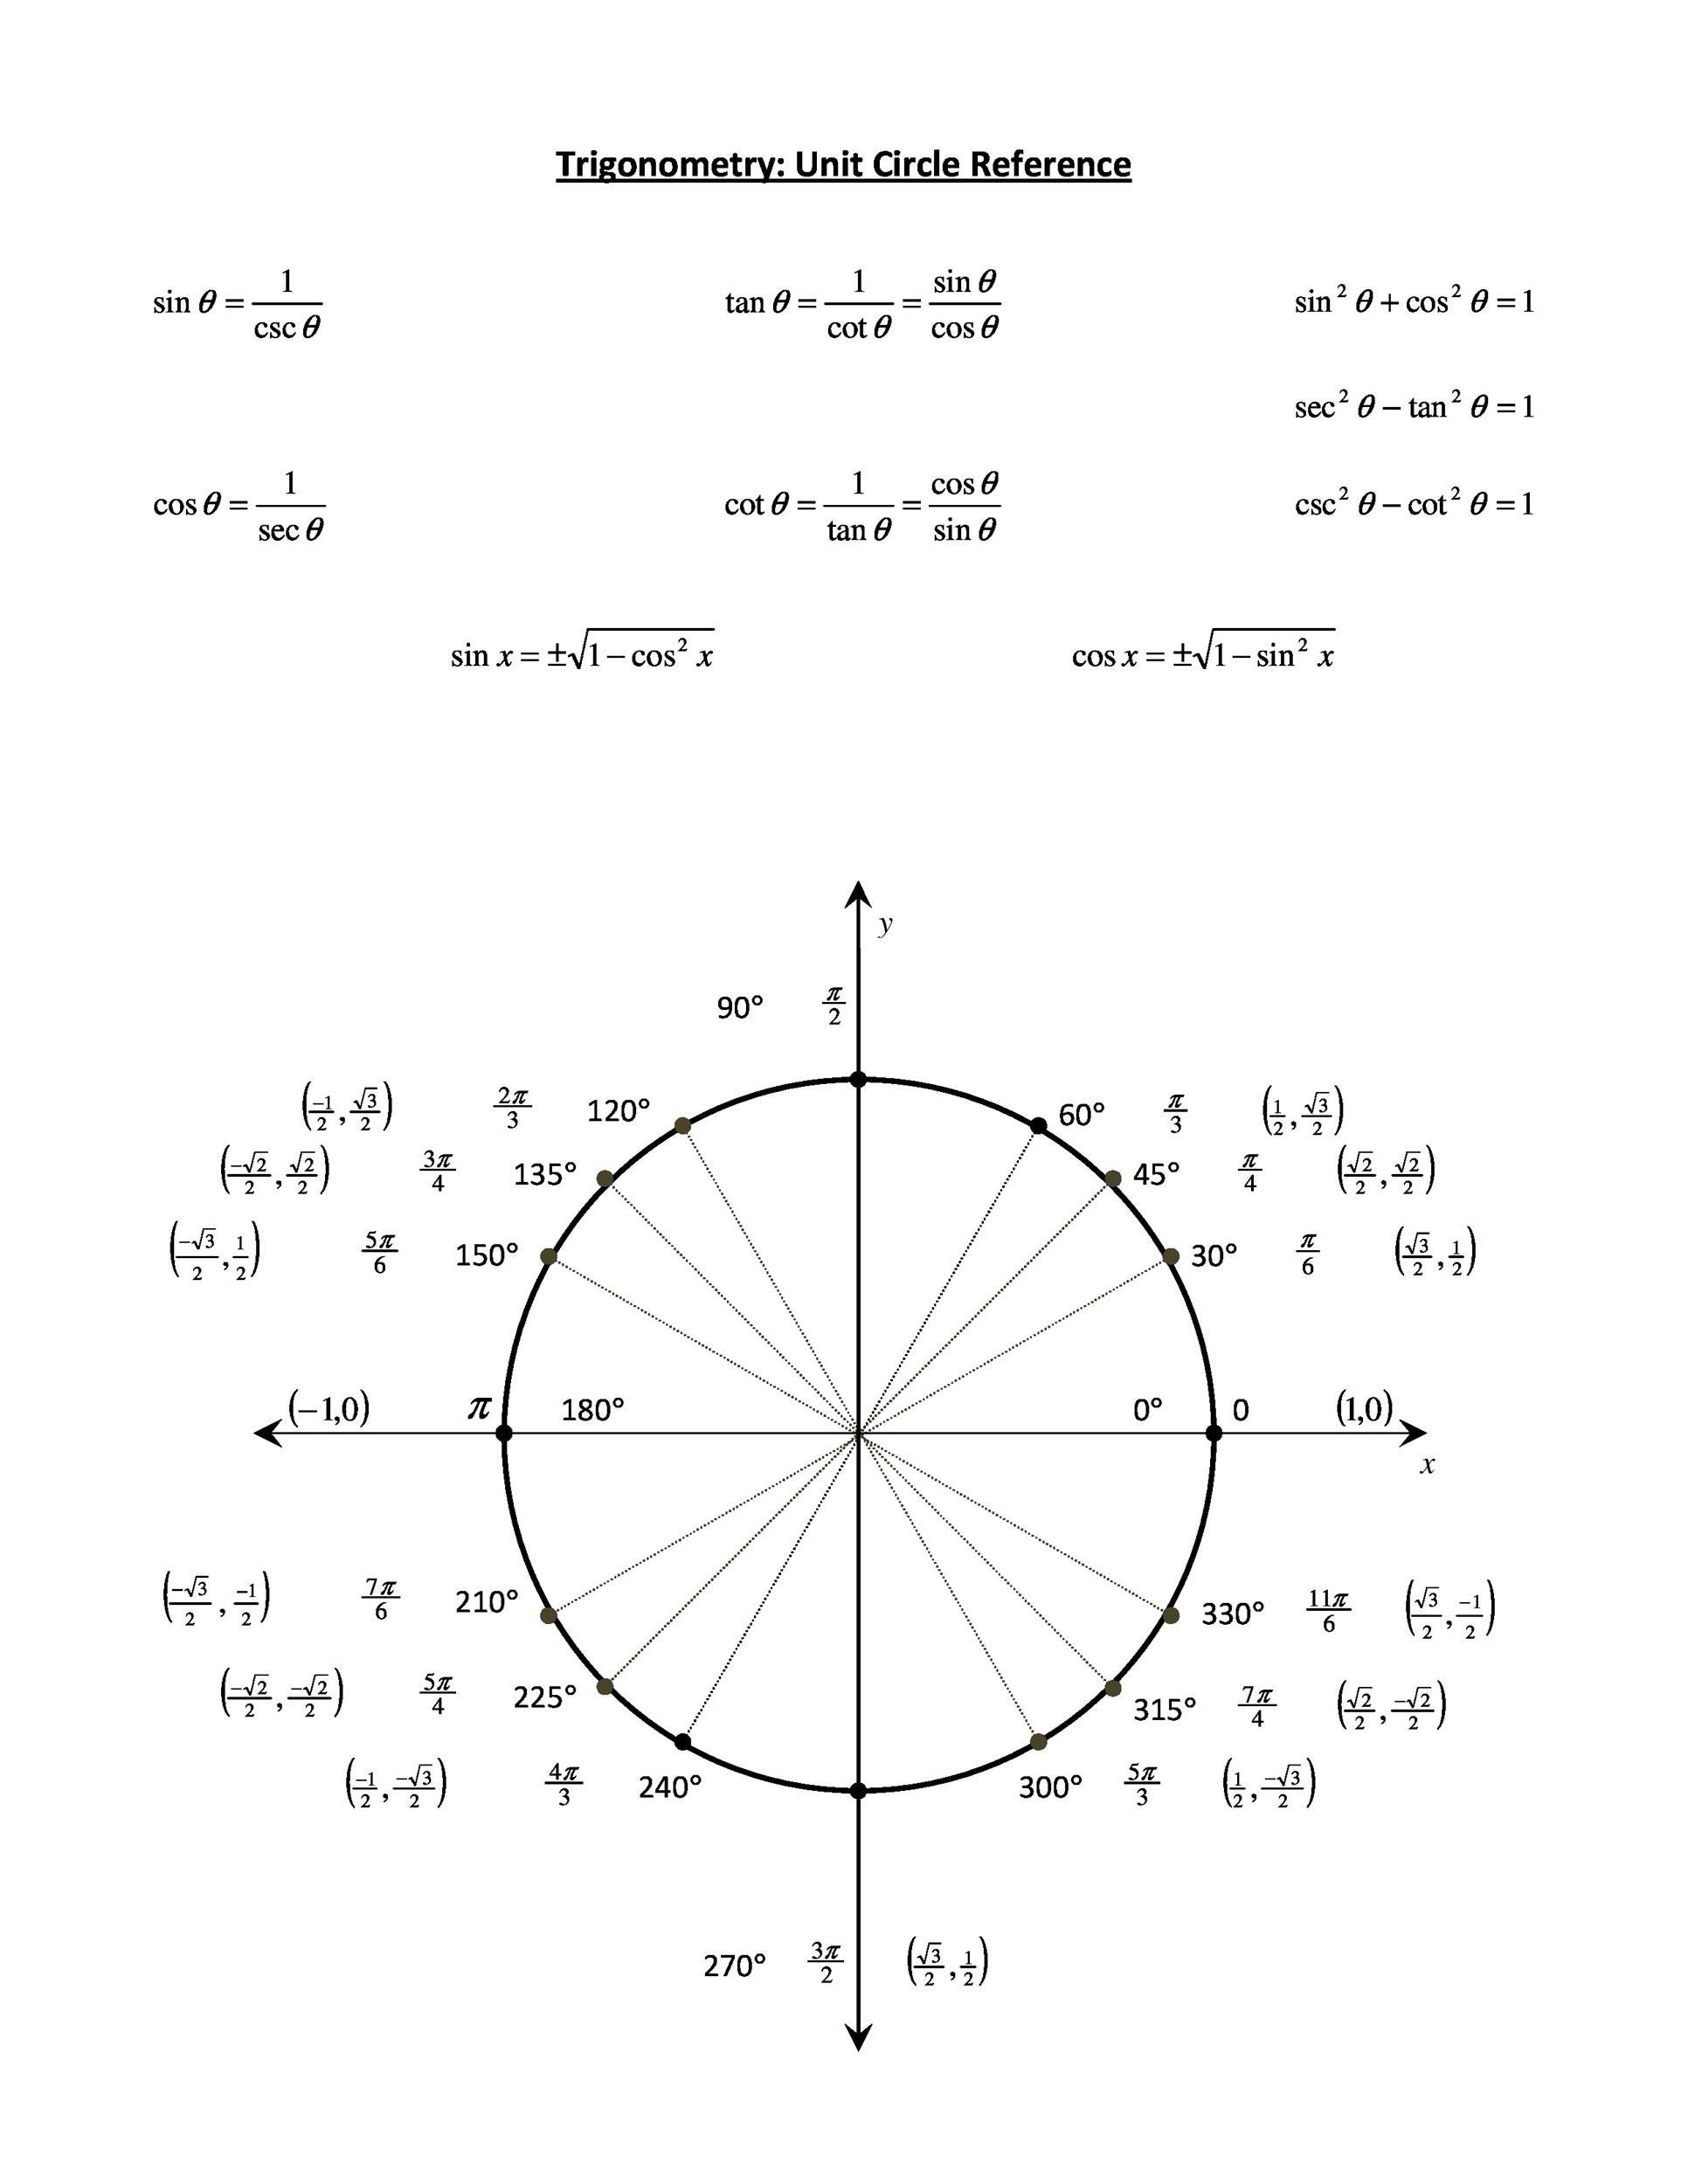 42 Printable Unit Circle Charts & Diagrams (Sin, Cos, Tan, Cot etc)